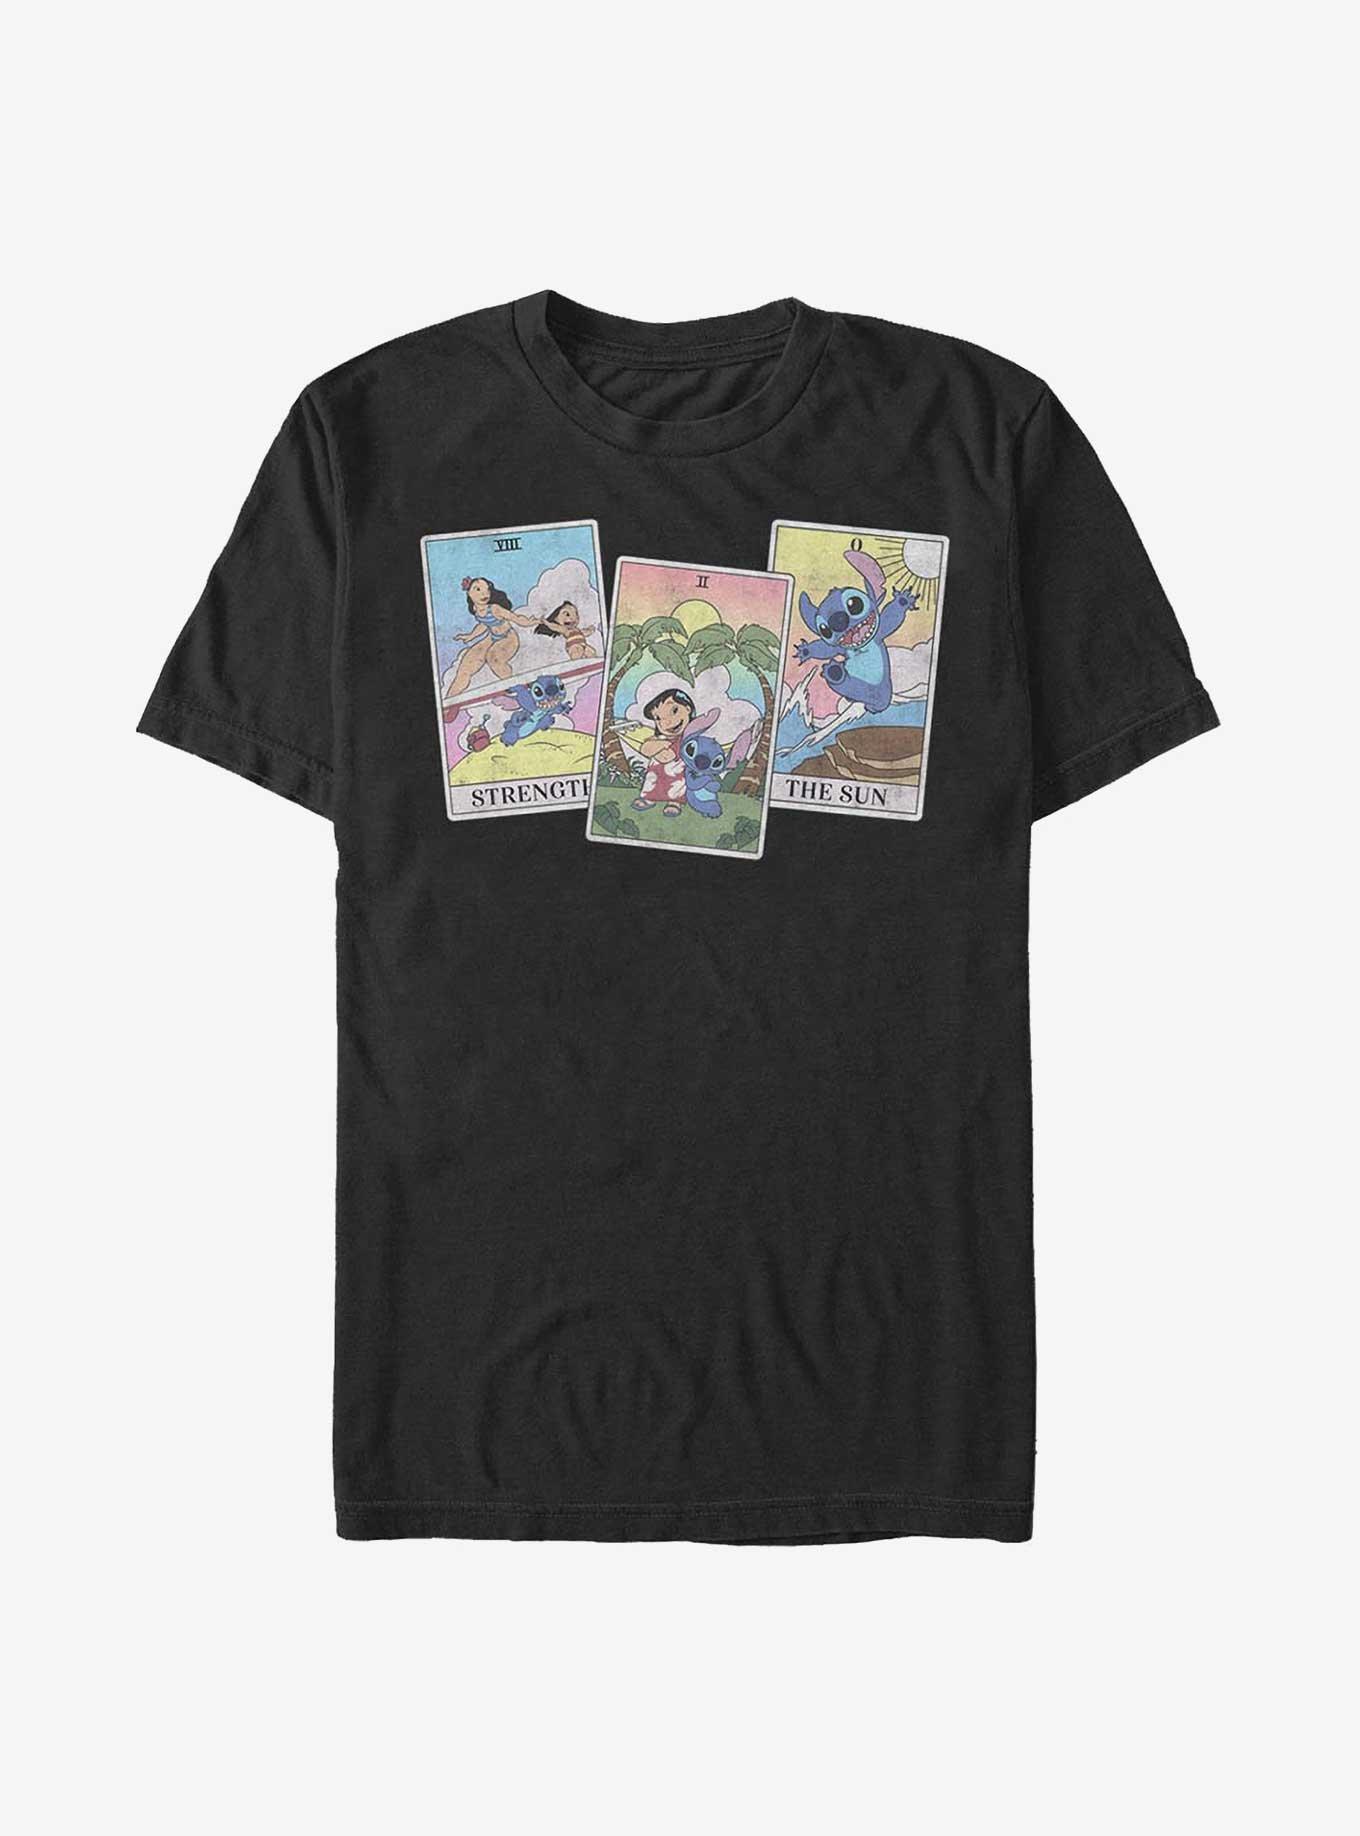 Disney Lilo & Stitch Tarot Cards T-Shirt